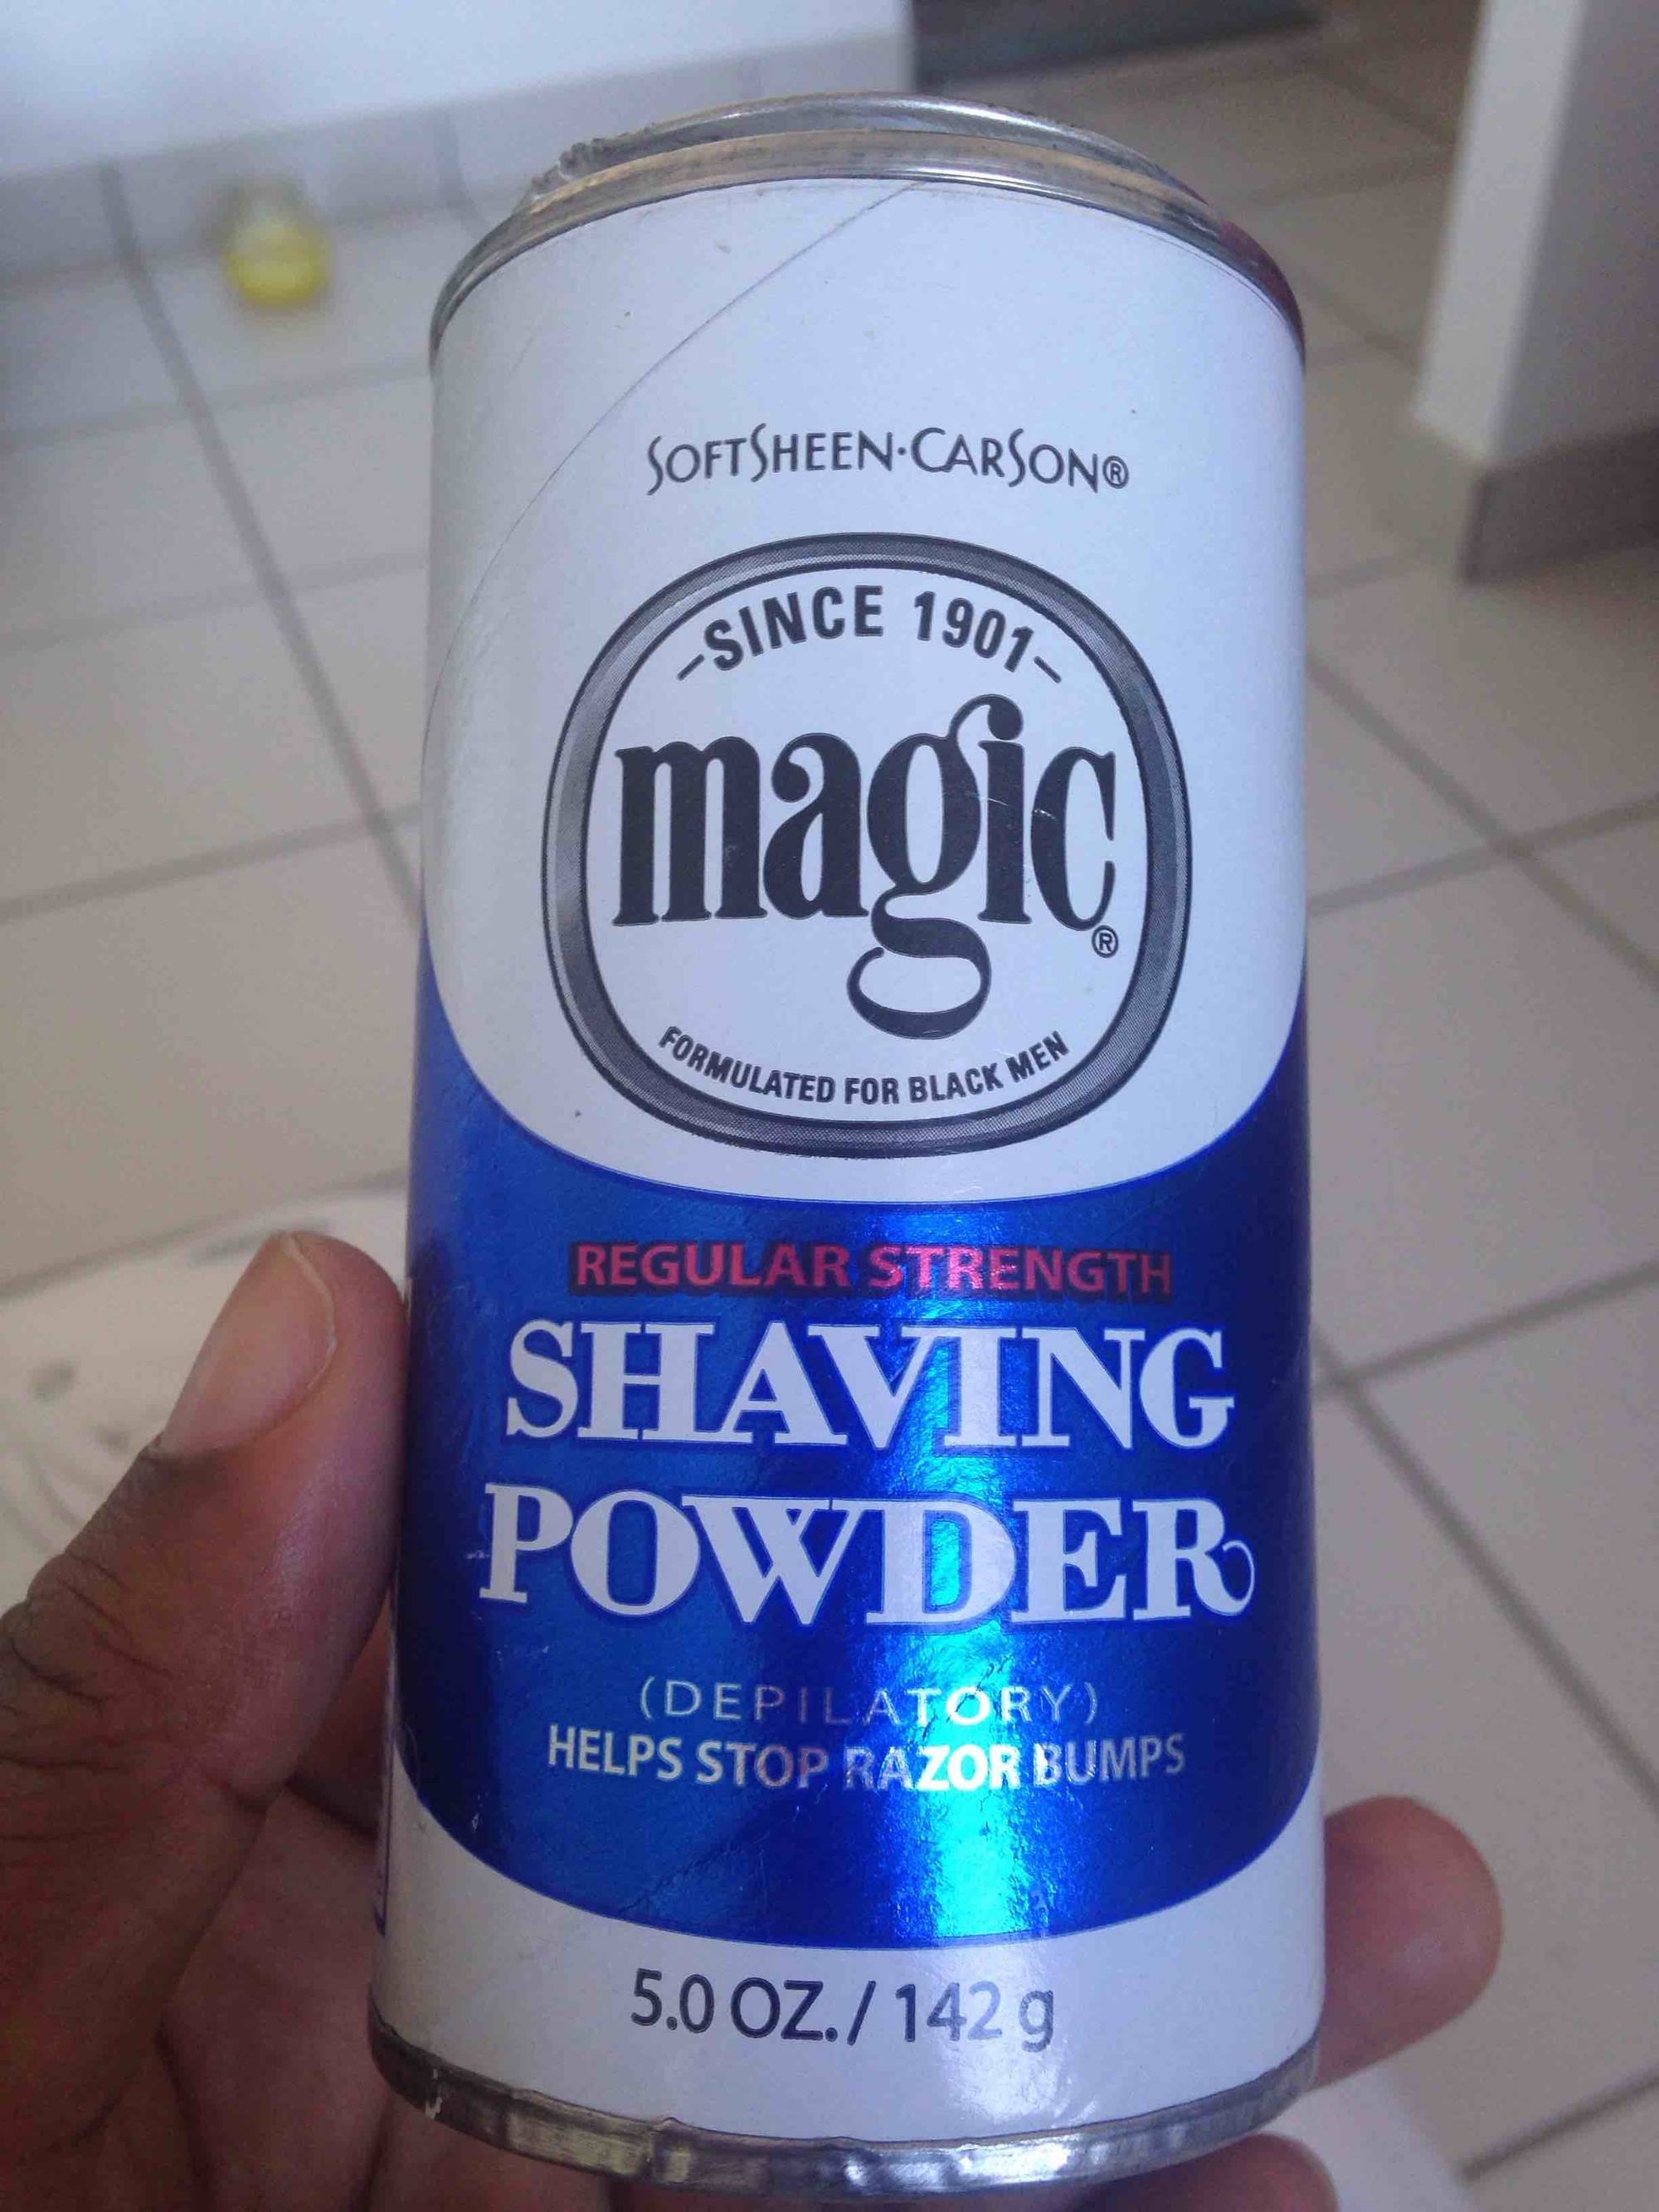 SOFTSHEEN CARSON - Magic - Shaving powder